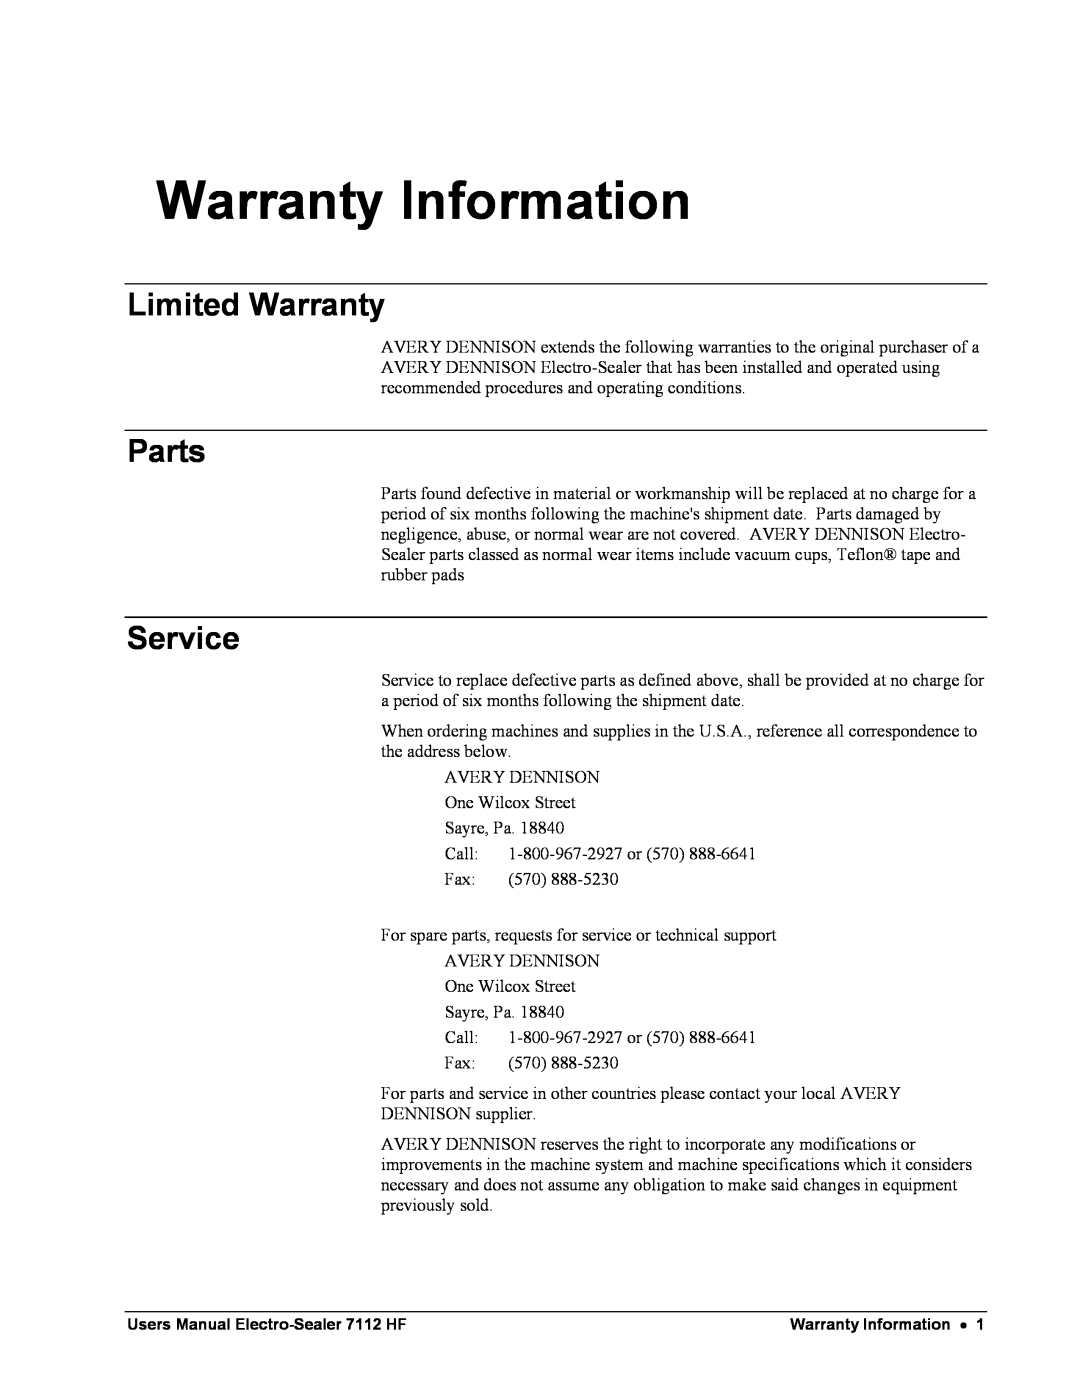 Avery 7112 HF user manual Warranty Information, Limited Warranty, Parts, Service 